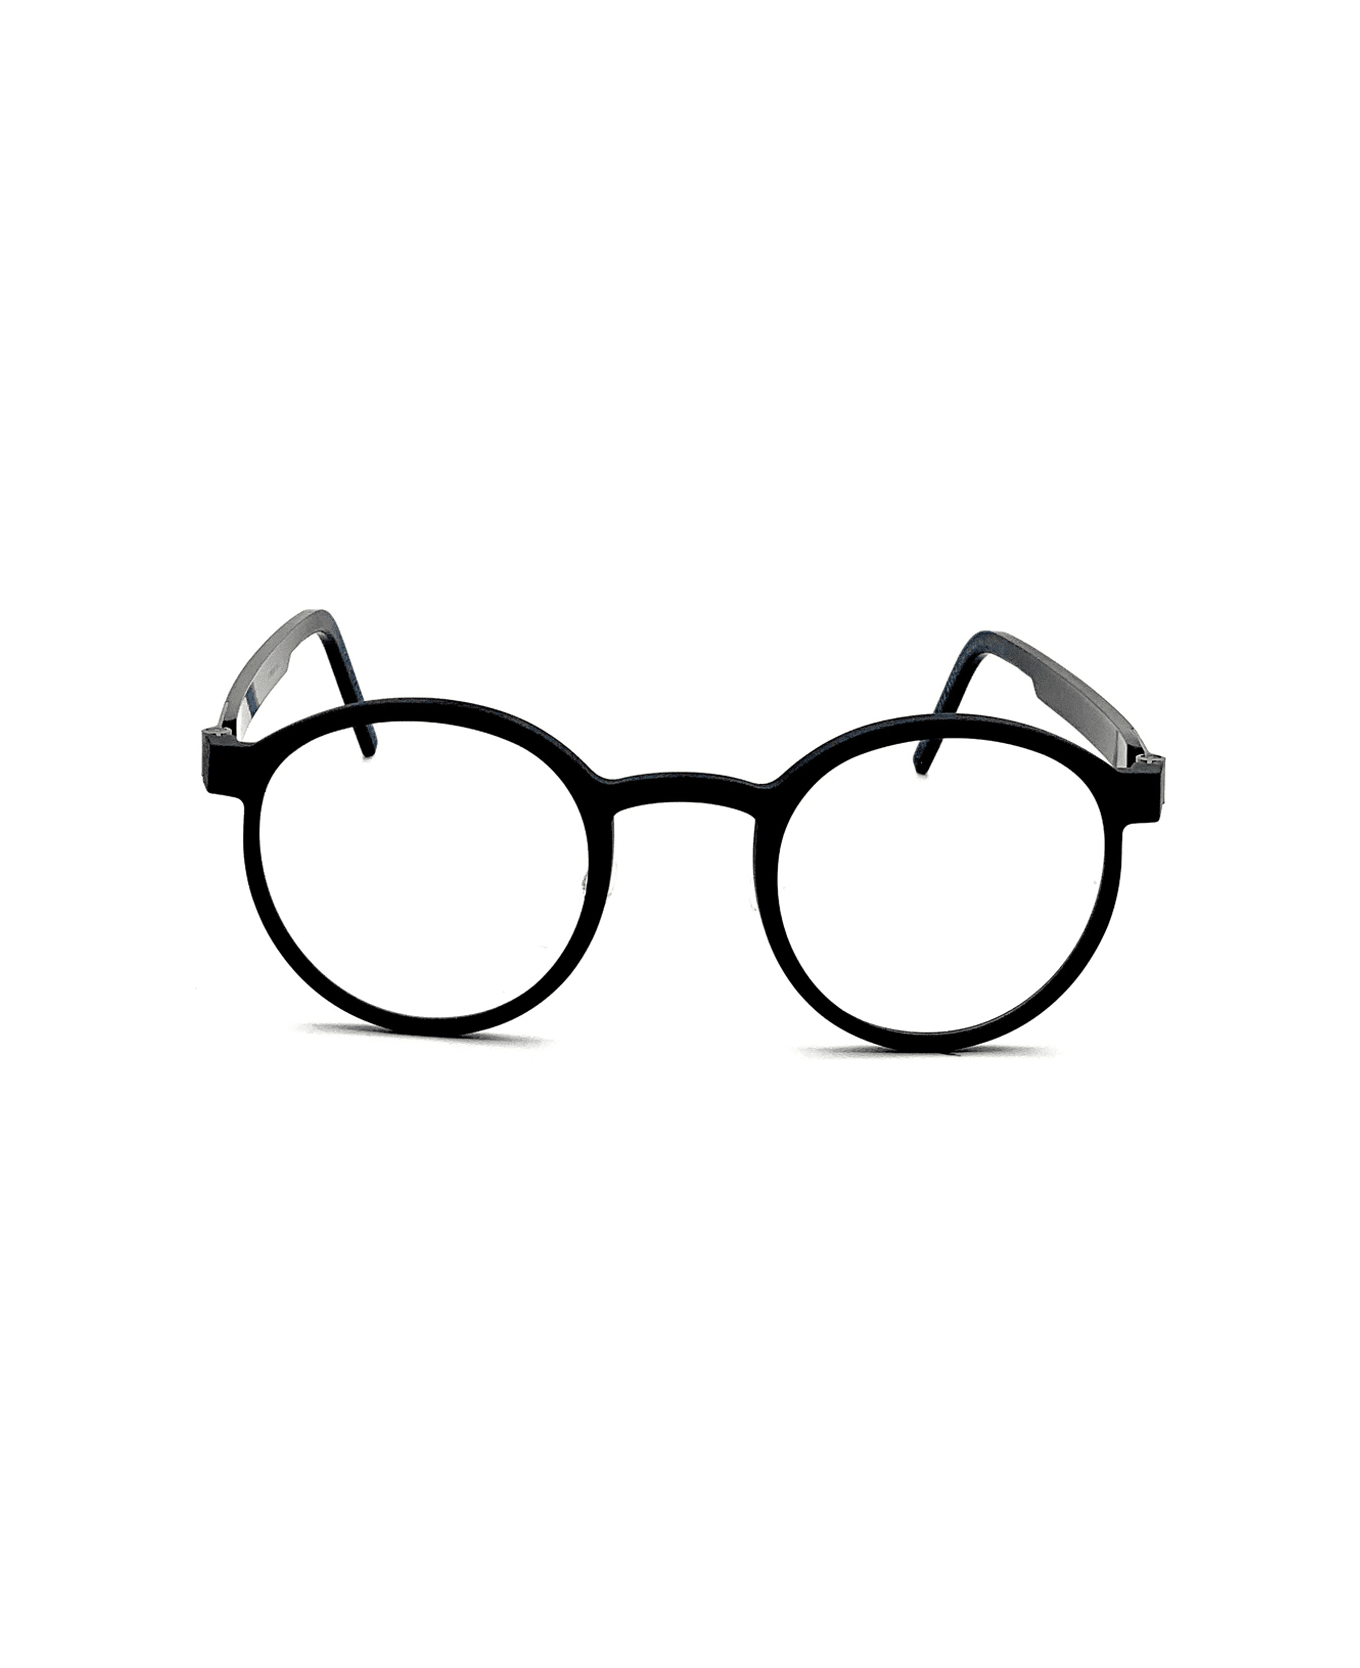 LINDBERG Acetanium 1014 Glasses - Nero アイウェア